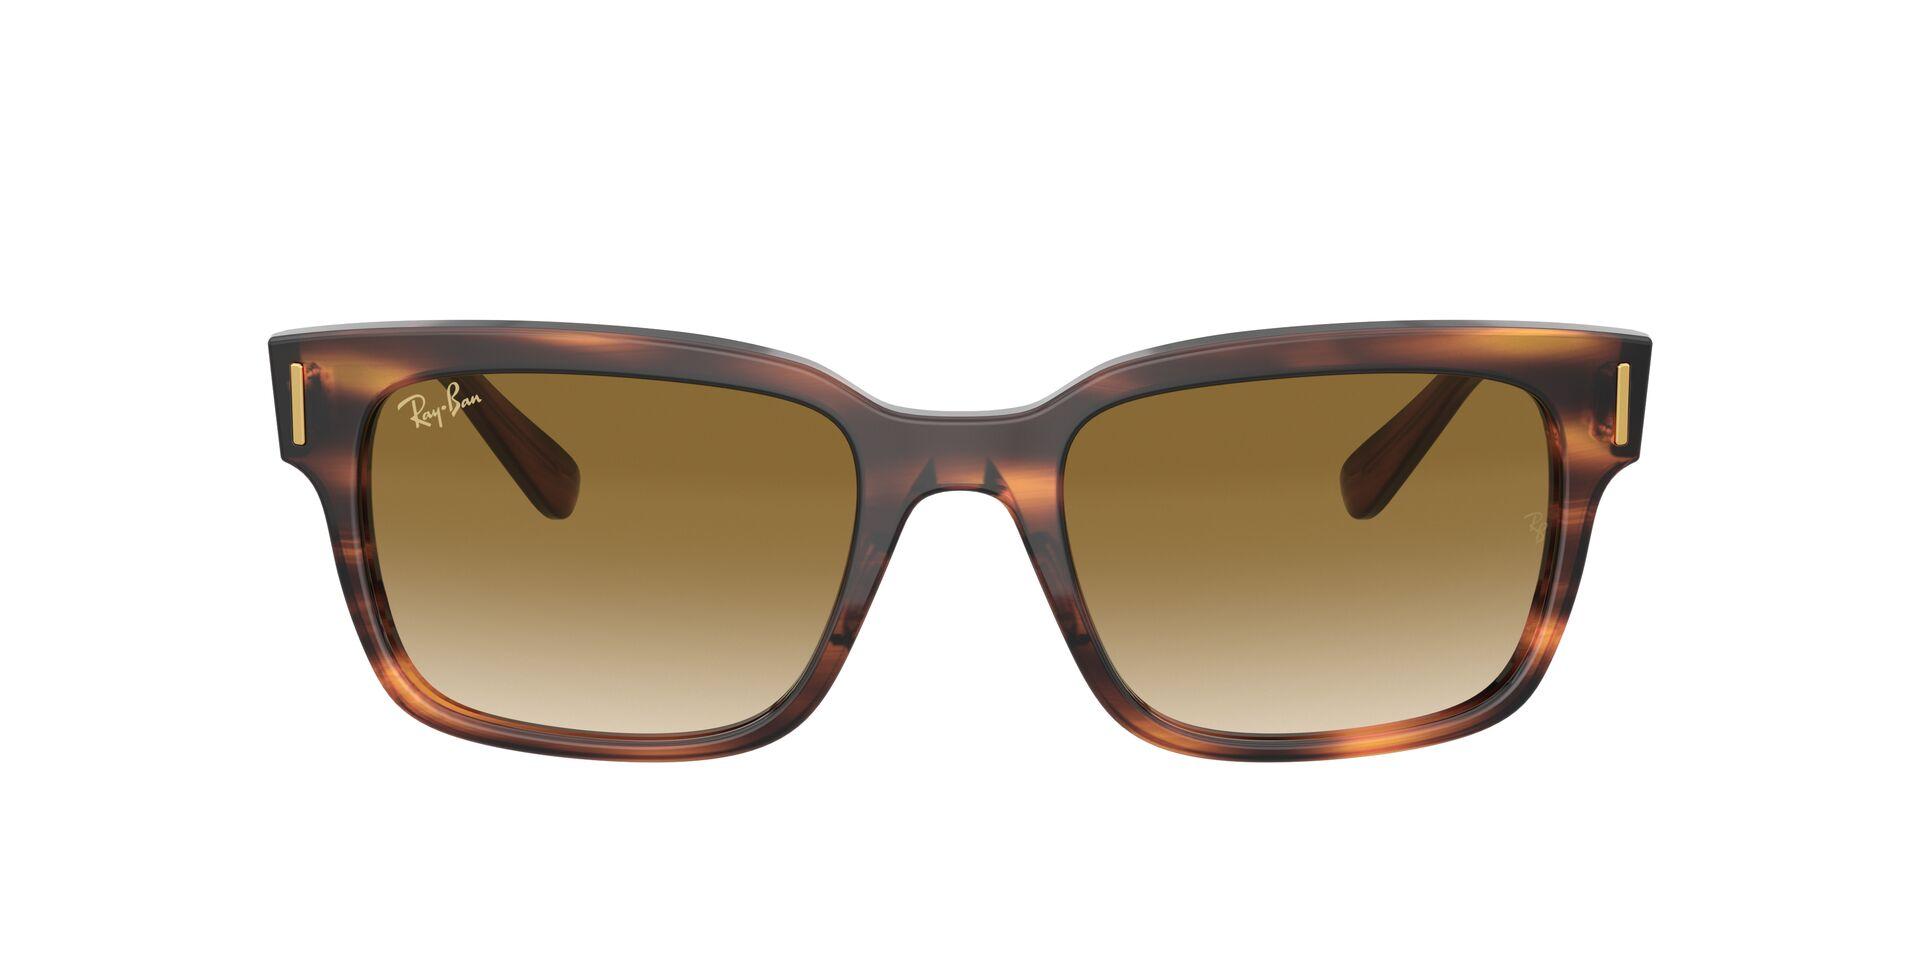 Mắt Kính RAY-BAN JEFFREY - RB2190 954/51 -Sunglasses